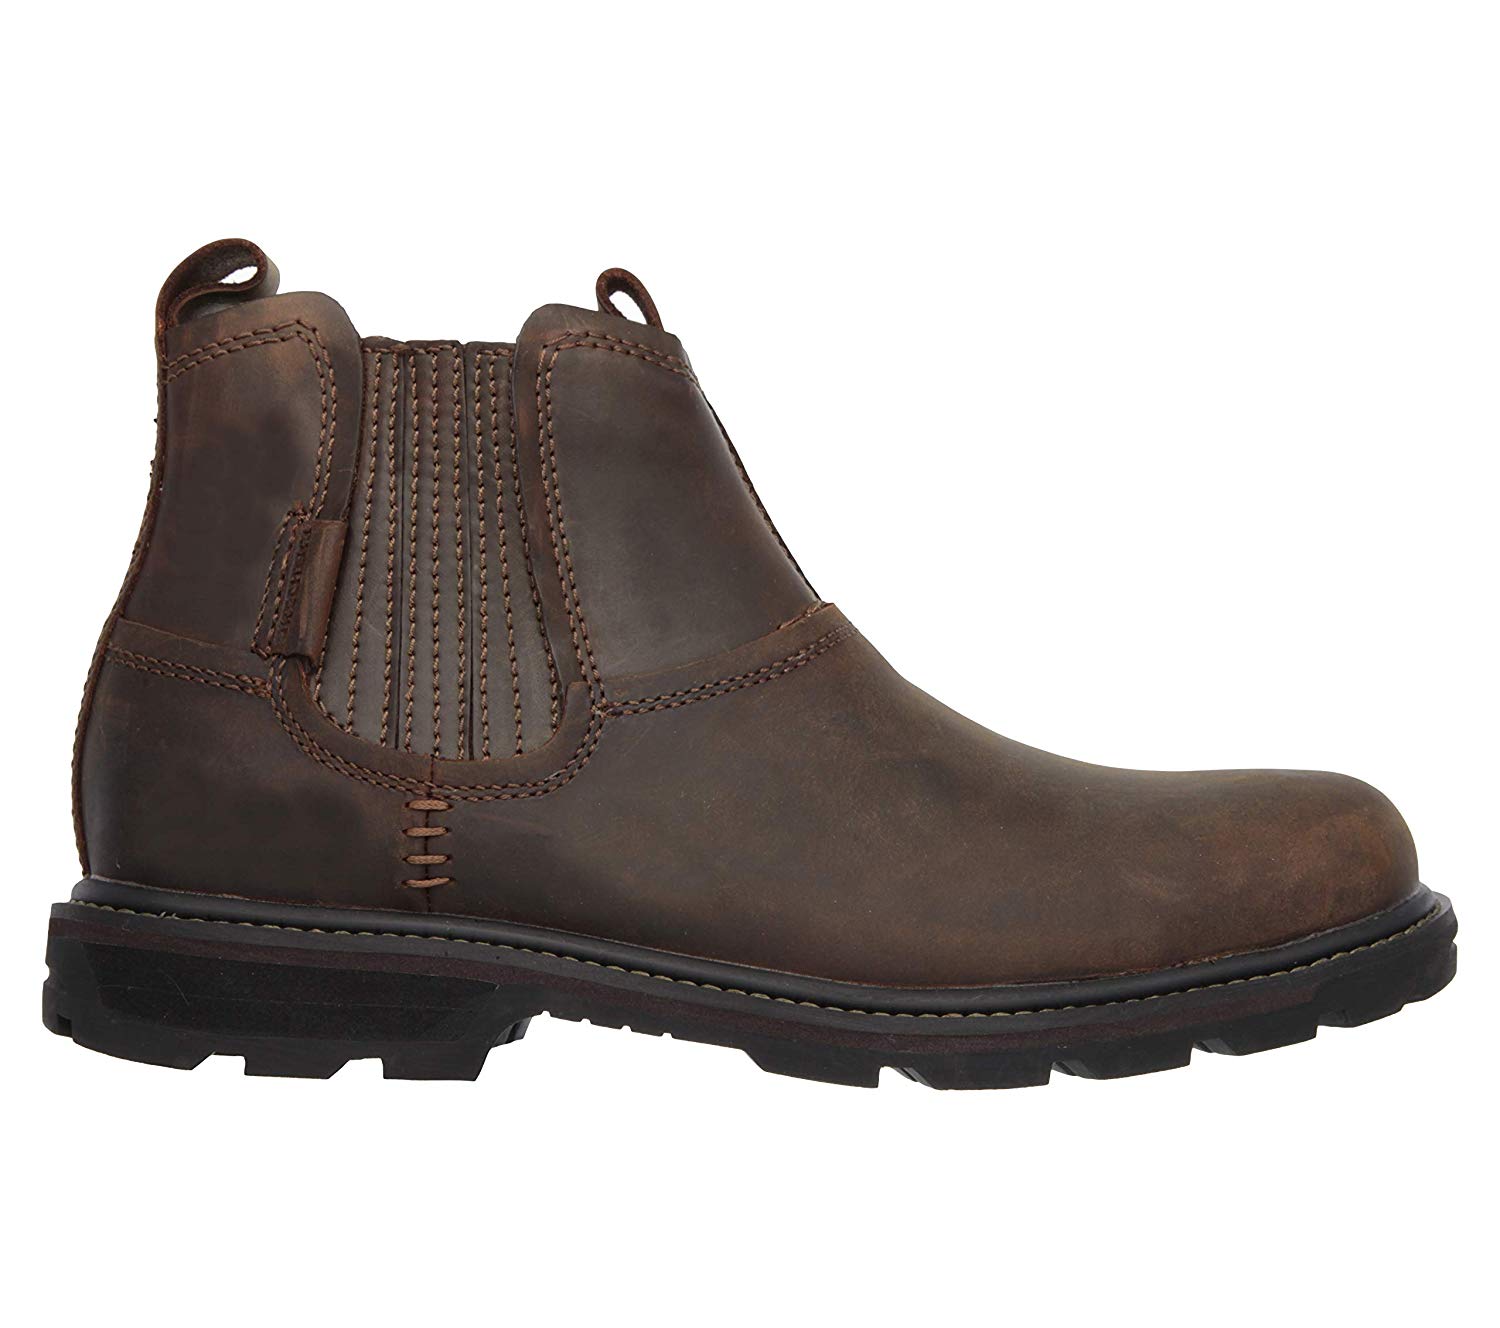 Skechers Men's Blaine Orsen Ankle Boot, Dark Brown, Size 11.0 qlyn | eBay